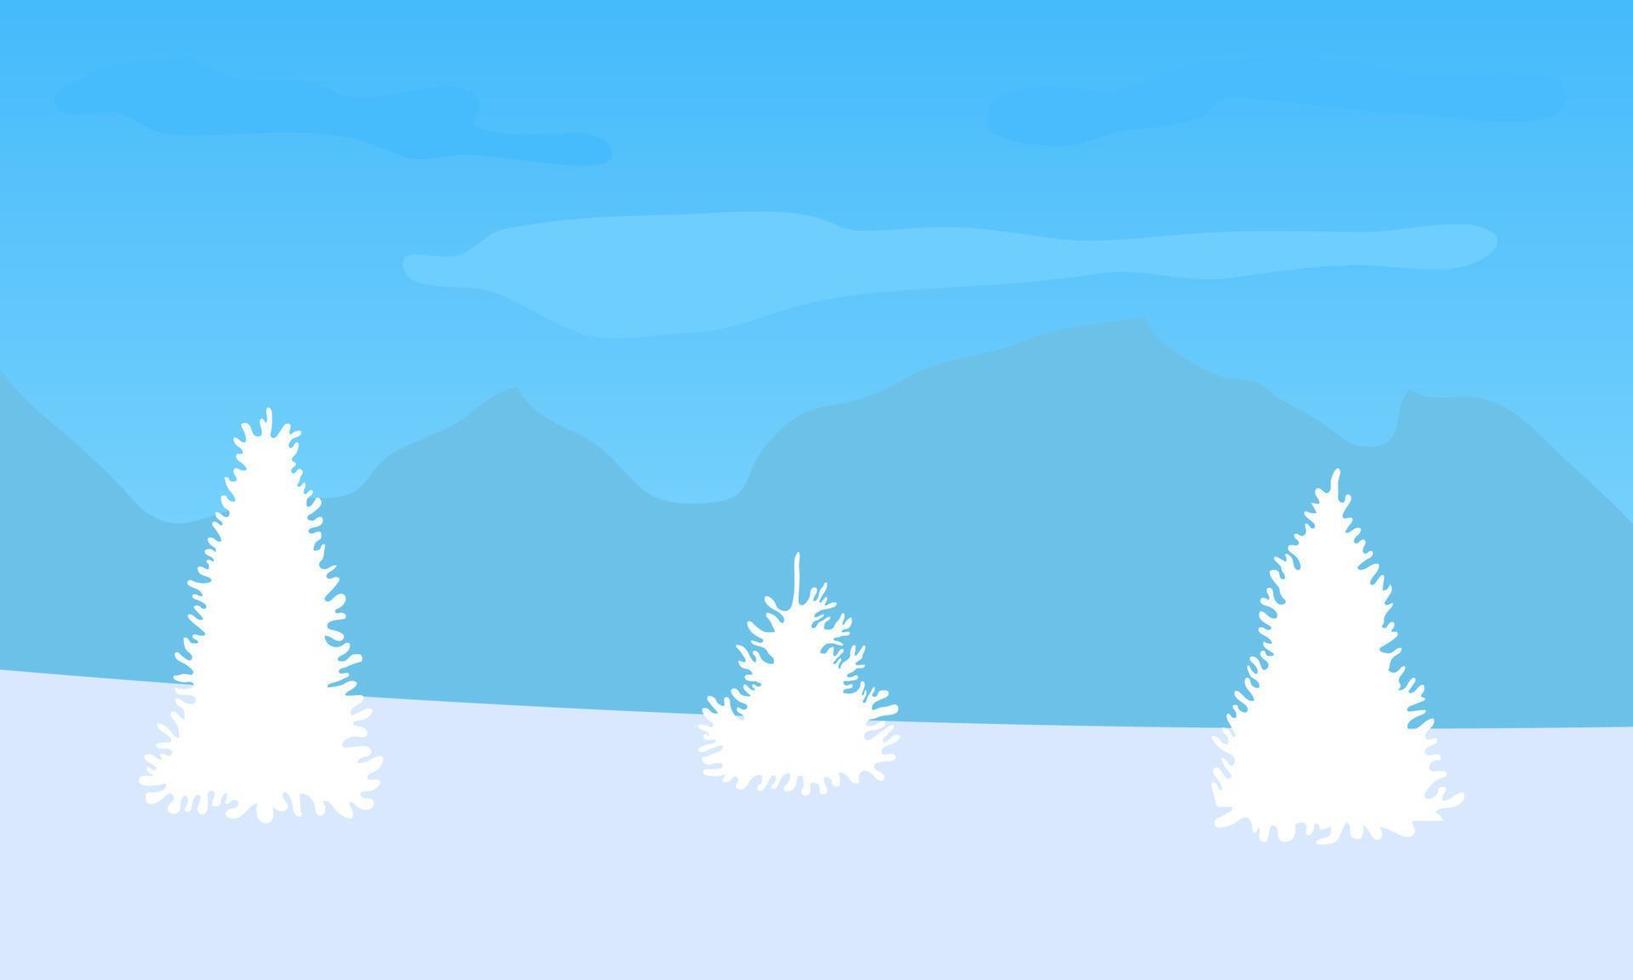 Winter Snowy Woodland Landscape. Winter background. Vector illustration